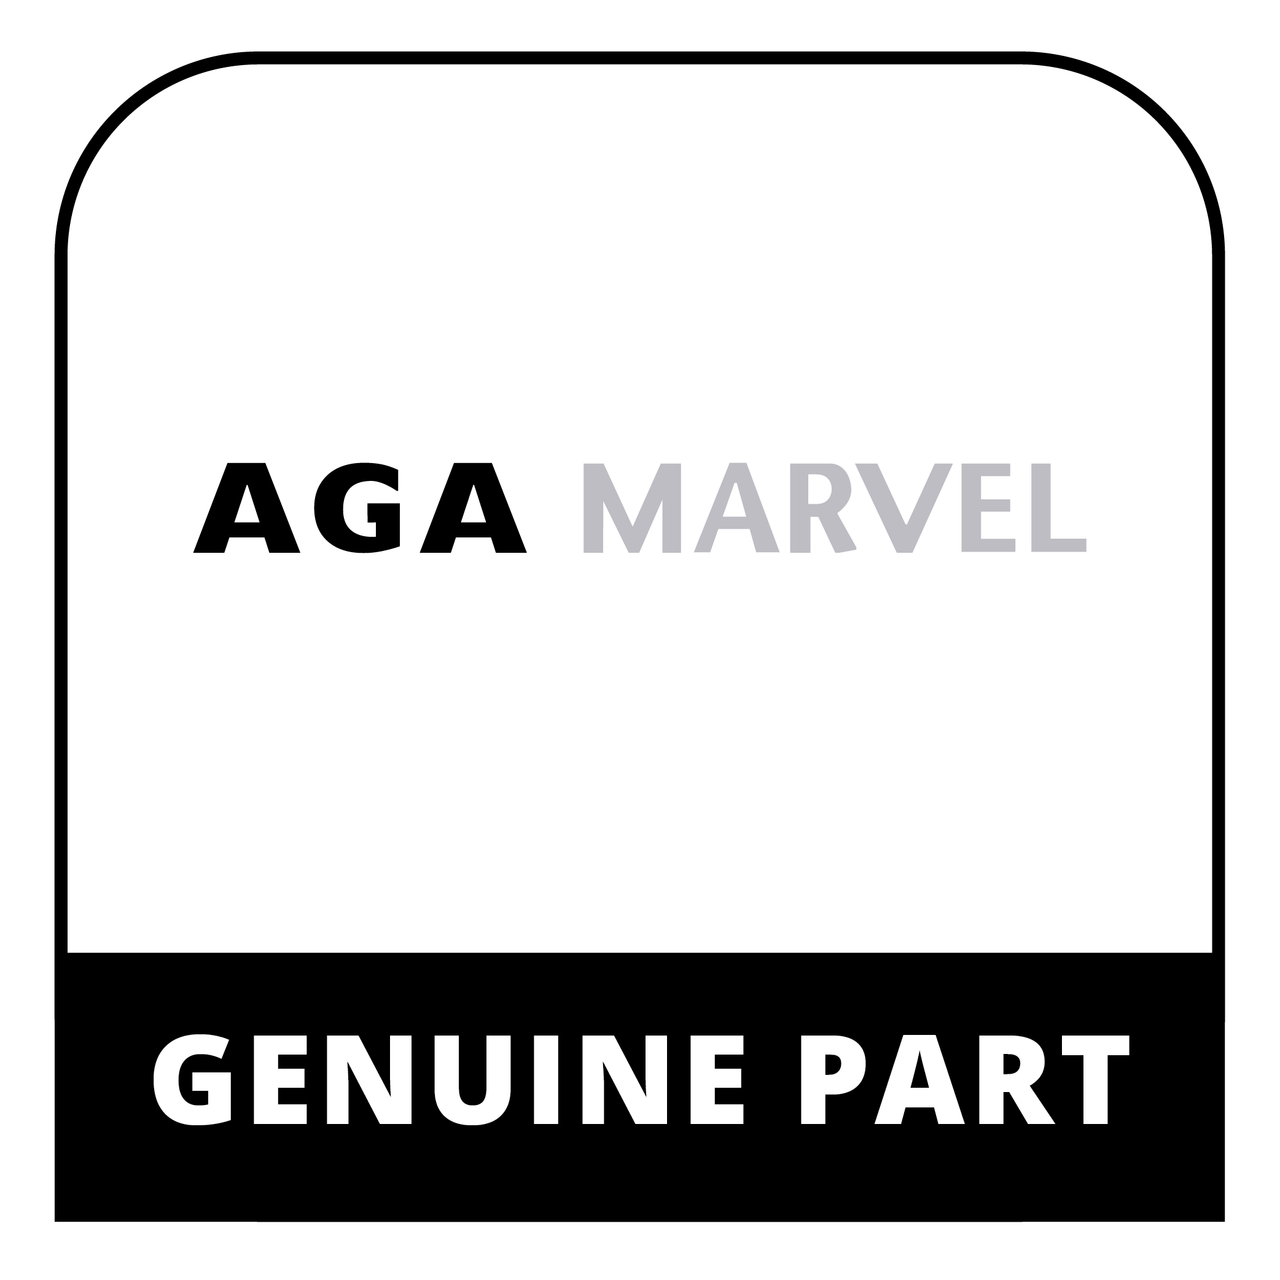 AGA Marvel P010368 - Cable Tie-Insuloid Lkox - Genuine AGA Marvel Part